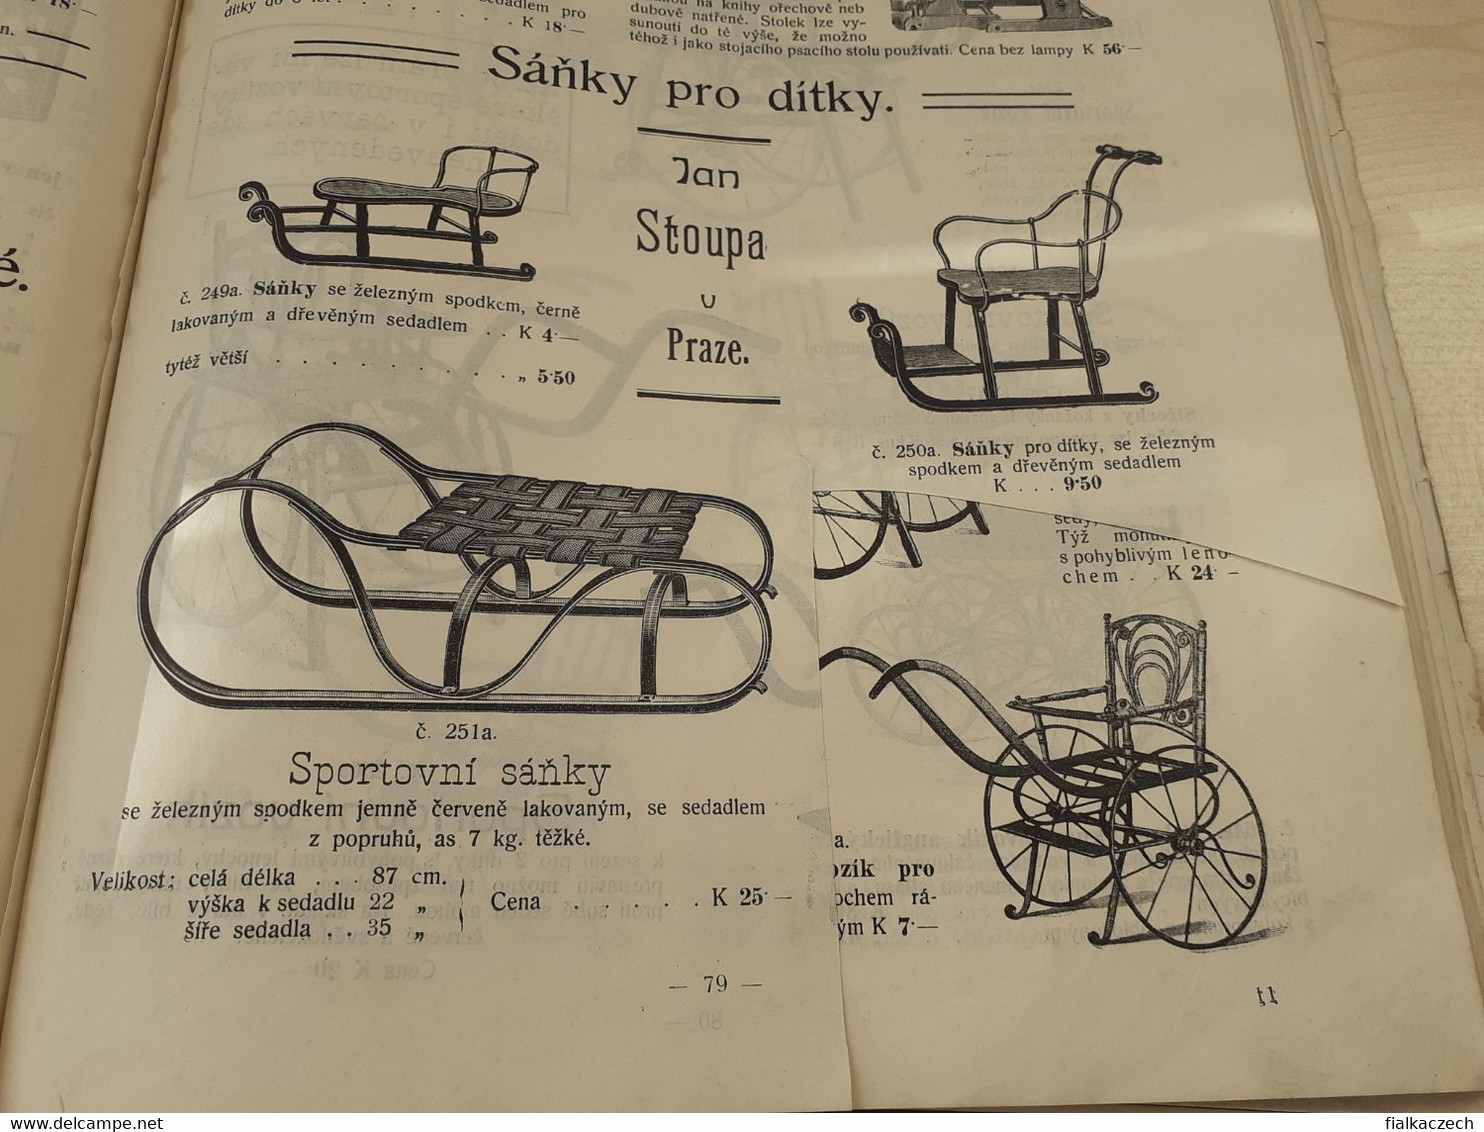 Old catalog, catalogue, Czechoslovakia, Jan Stoupa, Prague, Praha, furniture, chair, fabric, material, table, bed...